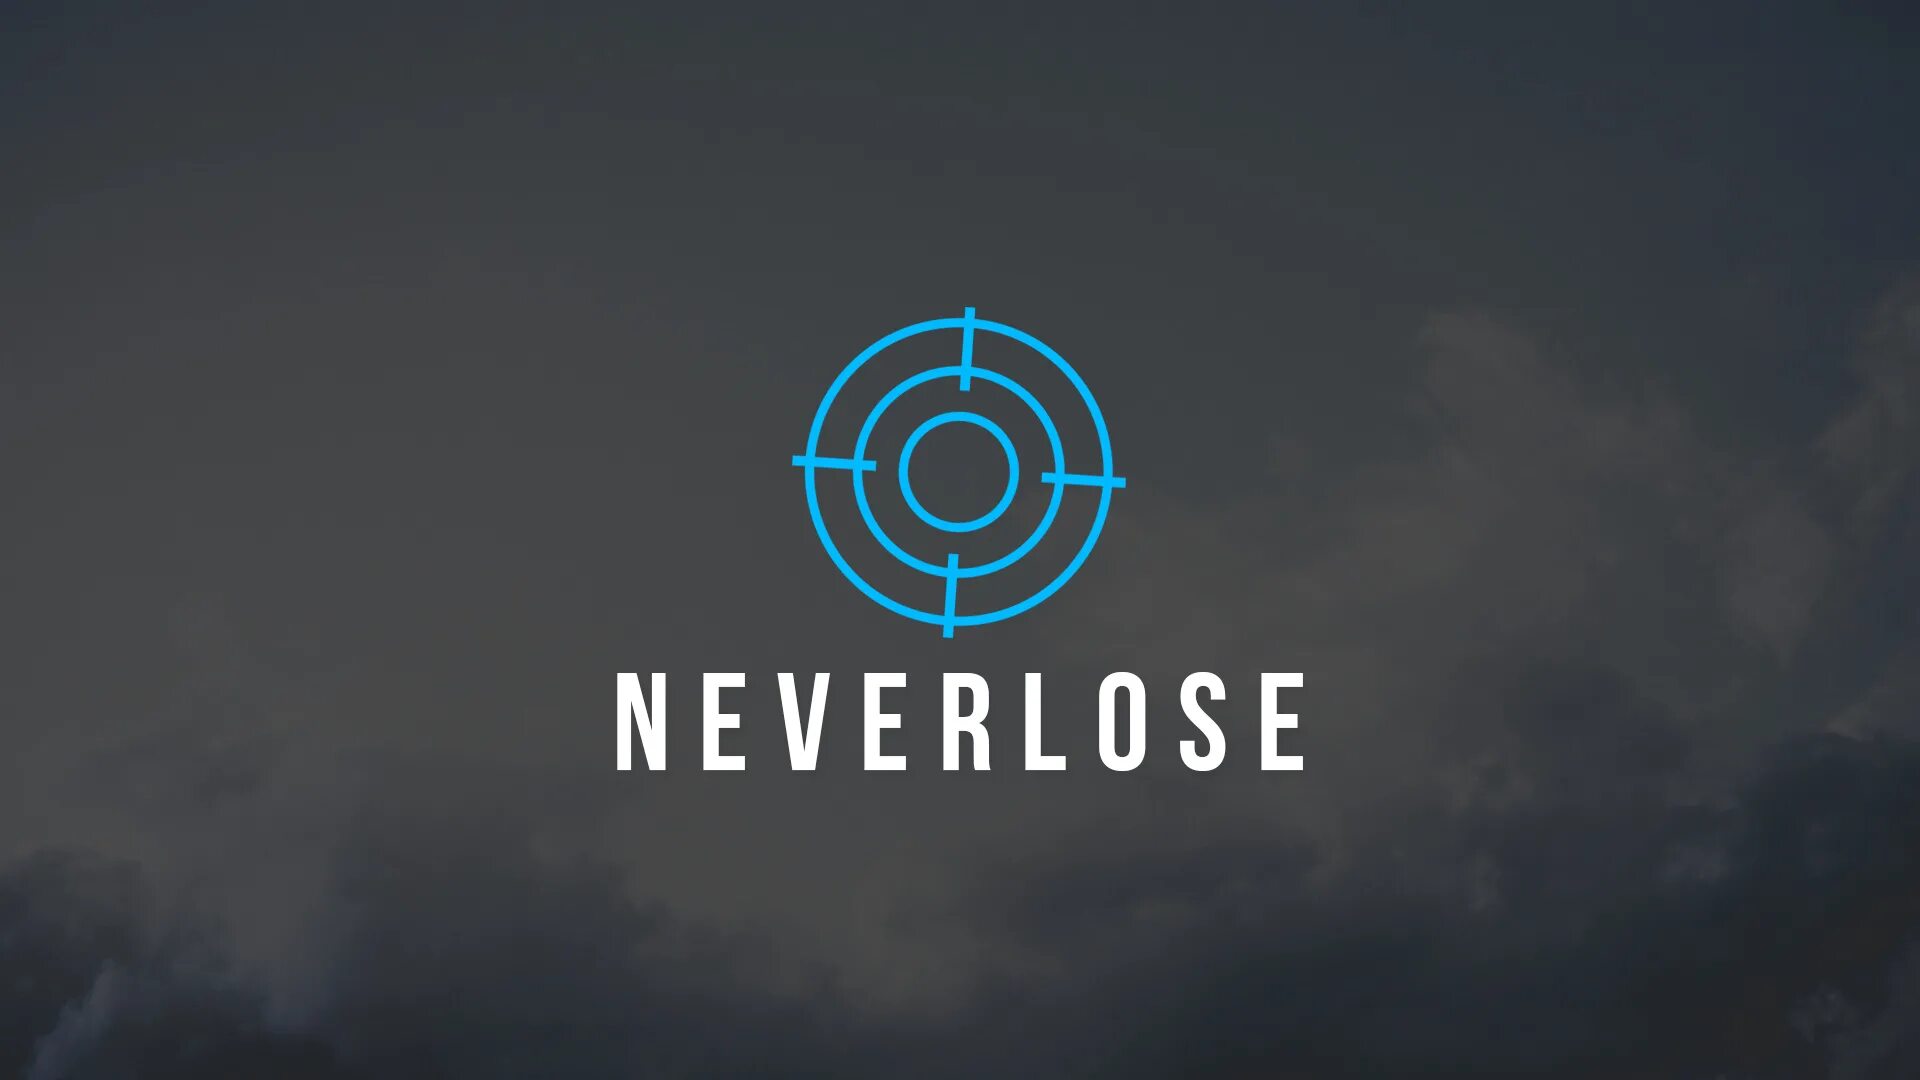 Neverlose.cc v1. Neverlose фото. Обои НЕВЕРЛУЗ. Neverlose.cc HVH Highlights. Https neverlose cc market